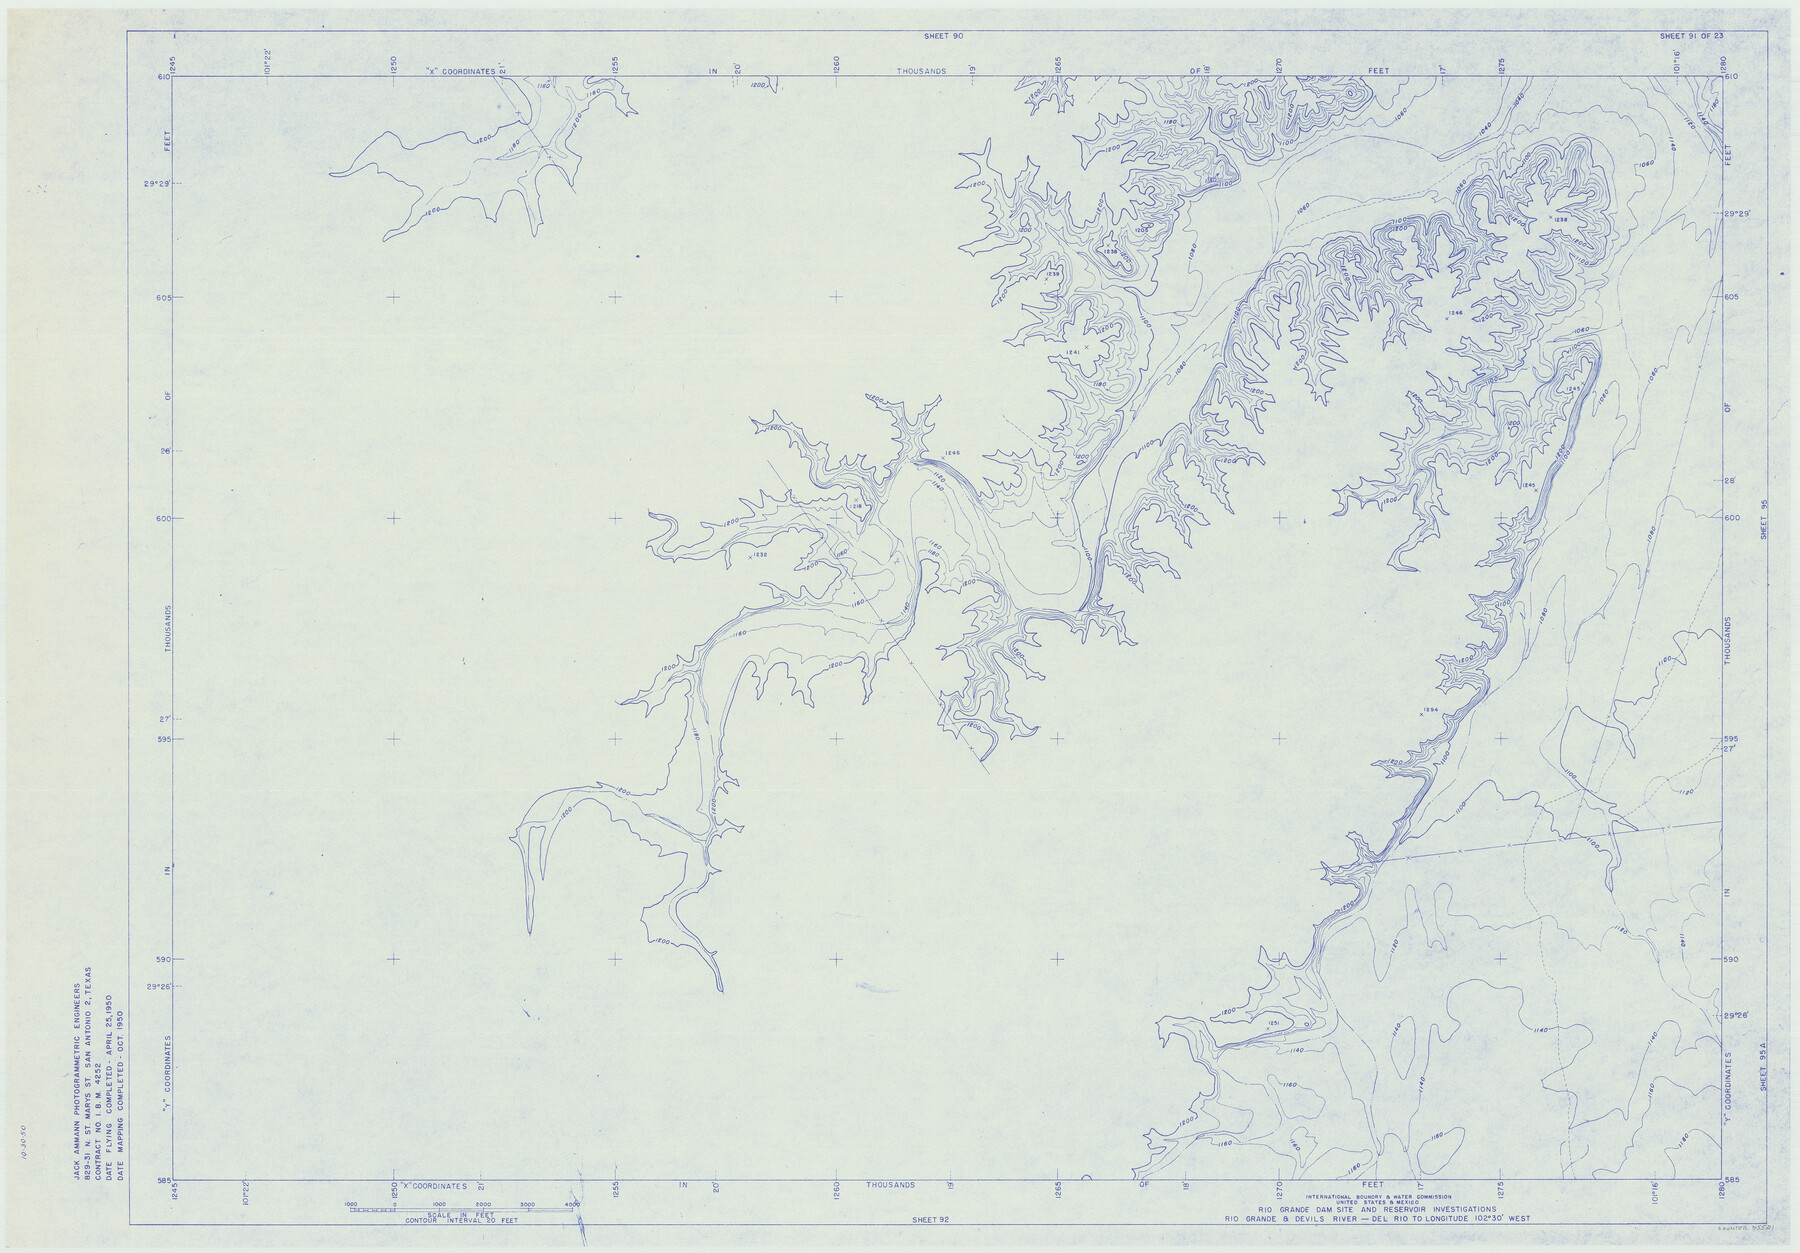 75521, Amistad International Reservoir on Rio Grande 91, General Map Collection